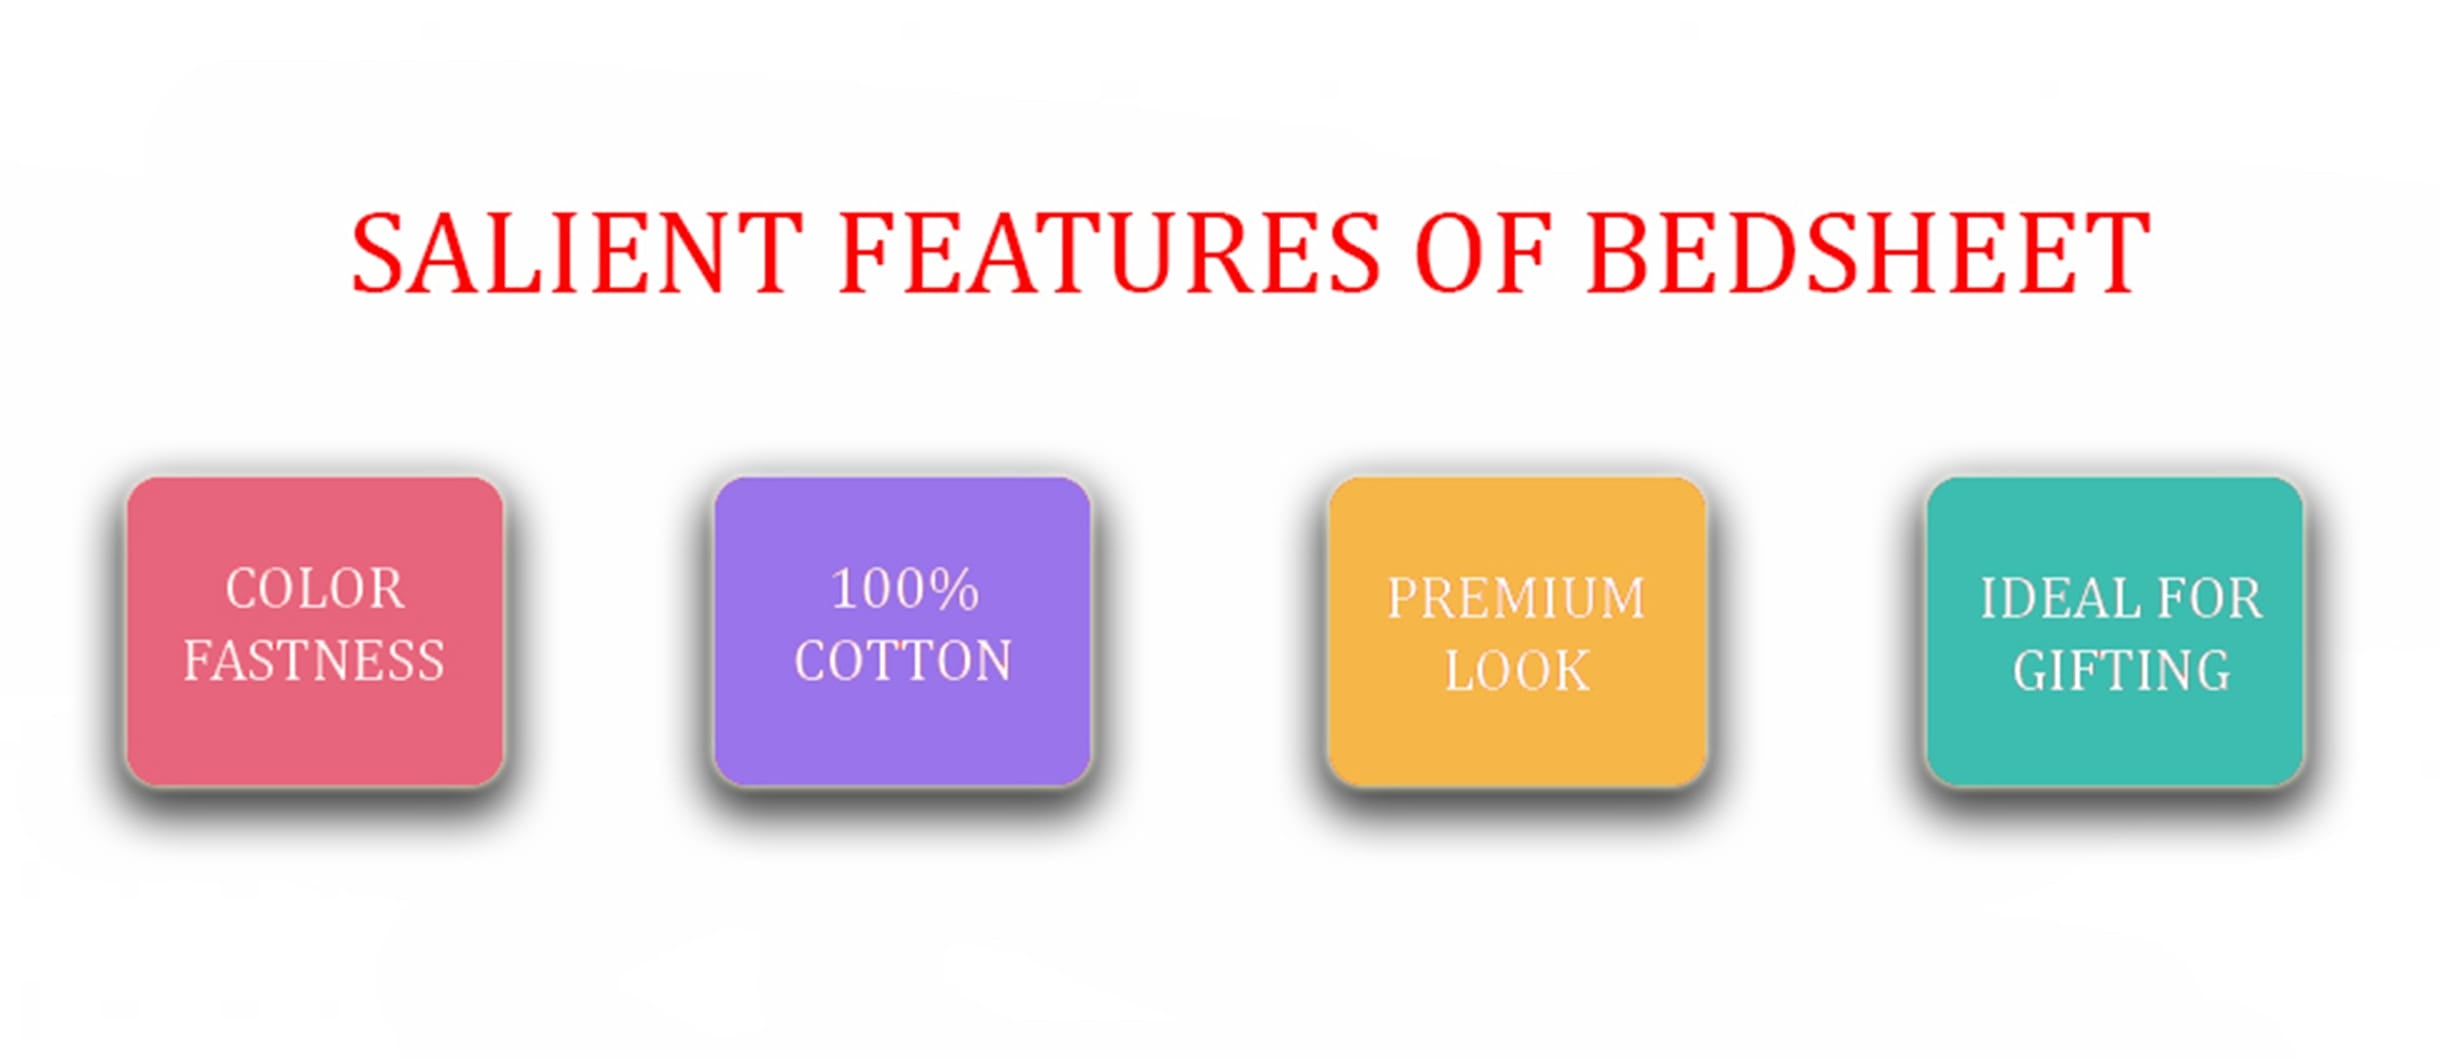 Soft Plain 210 TC Cotton Designer Bedsheet In Pink At Best Prices